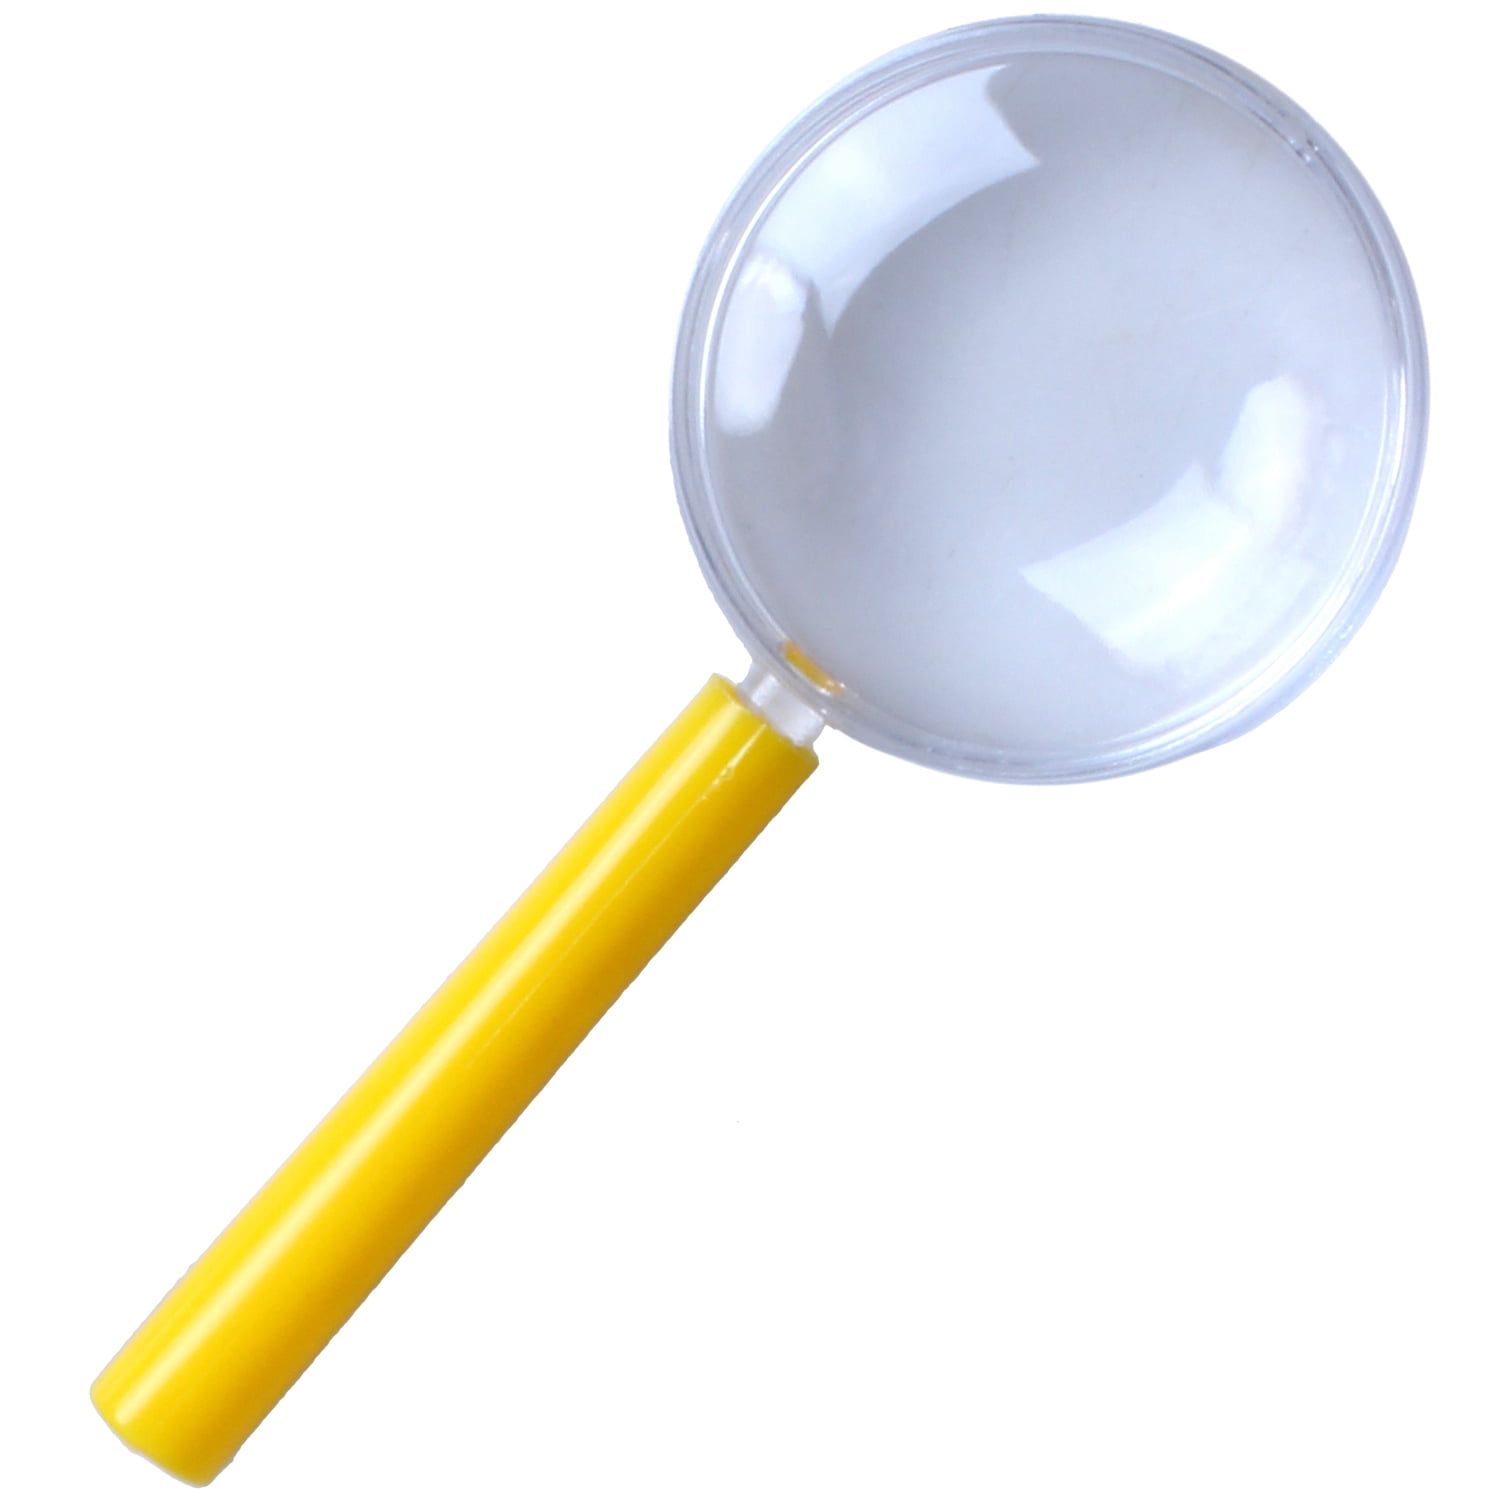 4pcs plastic mini magnifying glass children's toys N3 